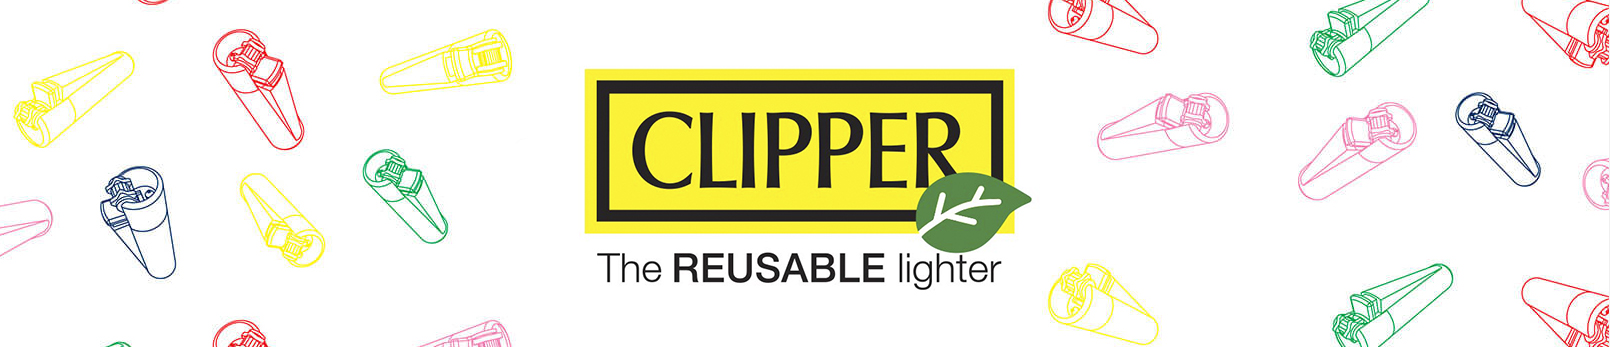 MECHERO CLIPPER EXPOSITOR TUBE CLASSIC – CR SHOP1990